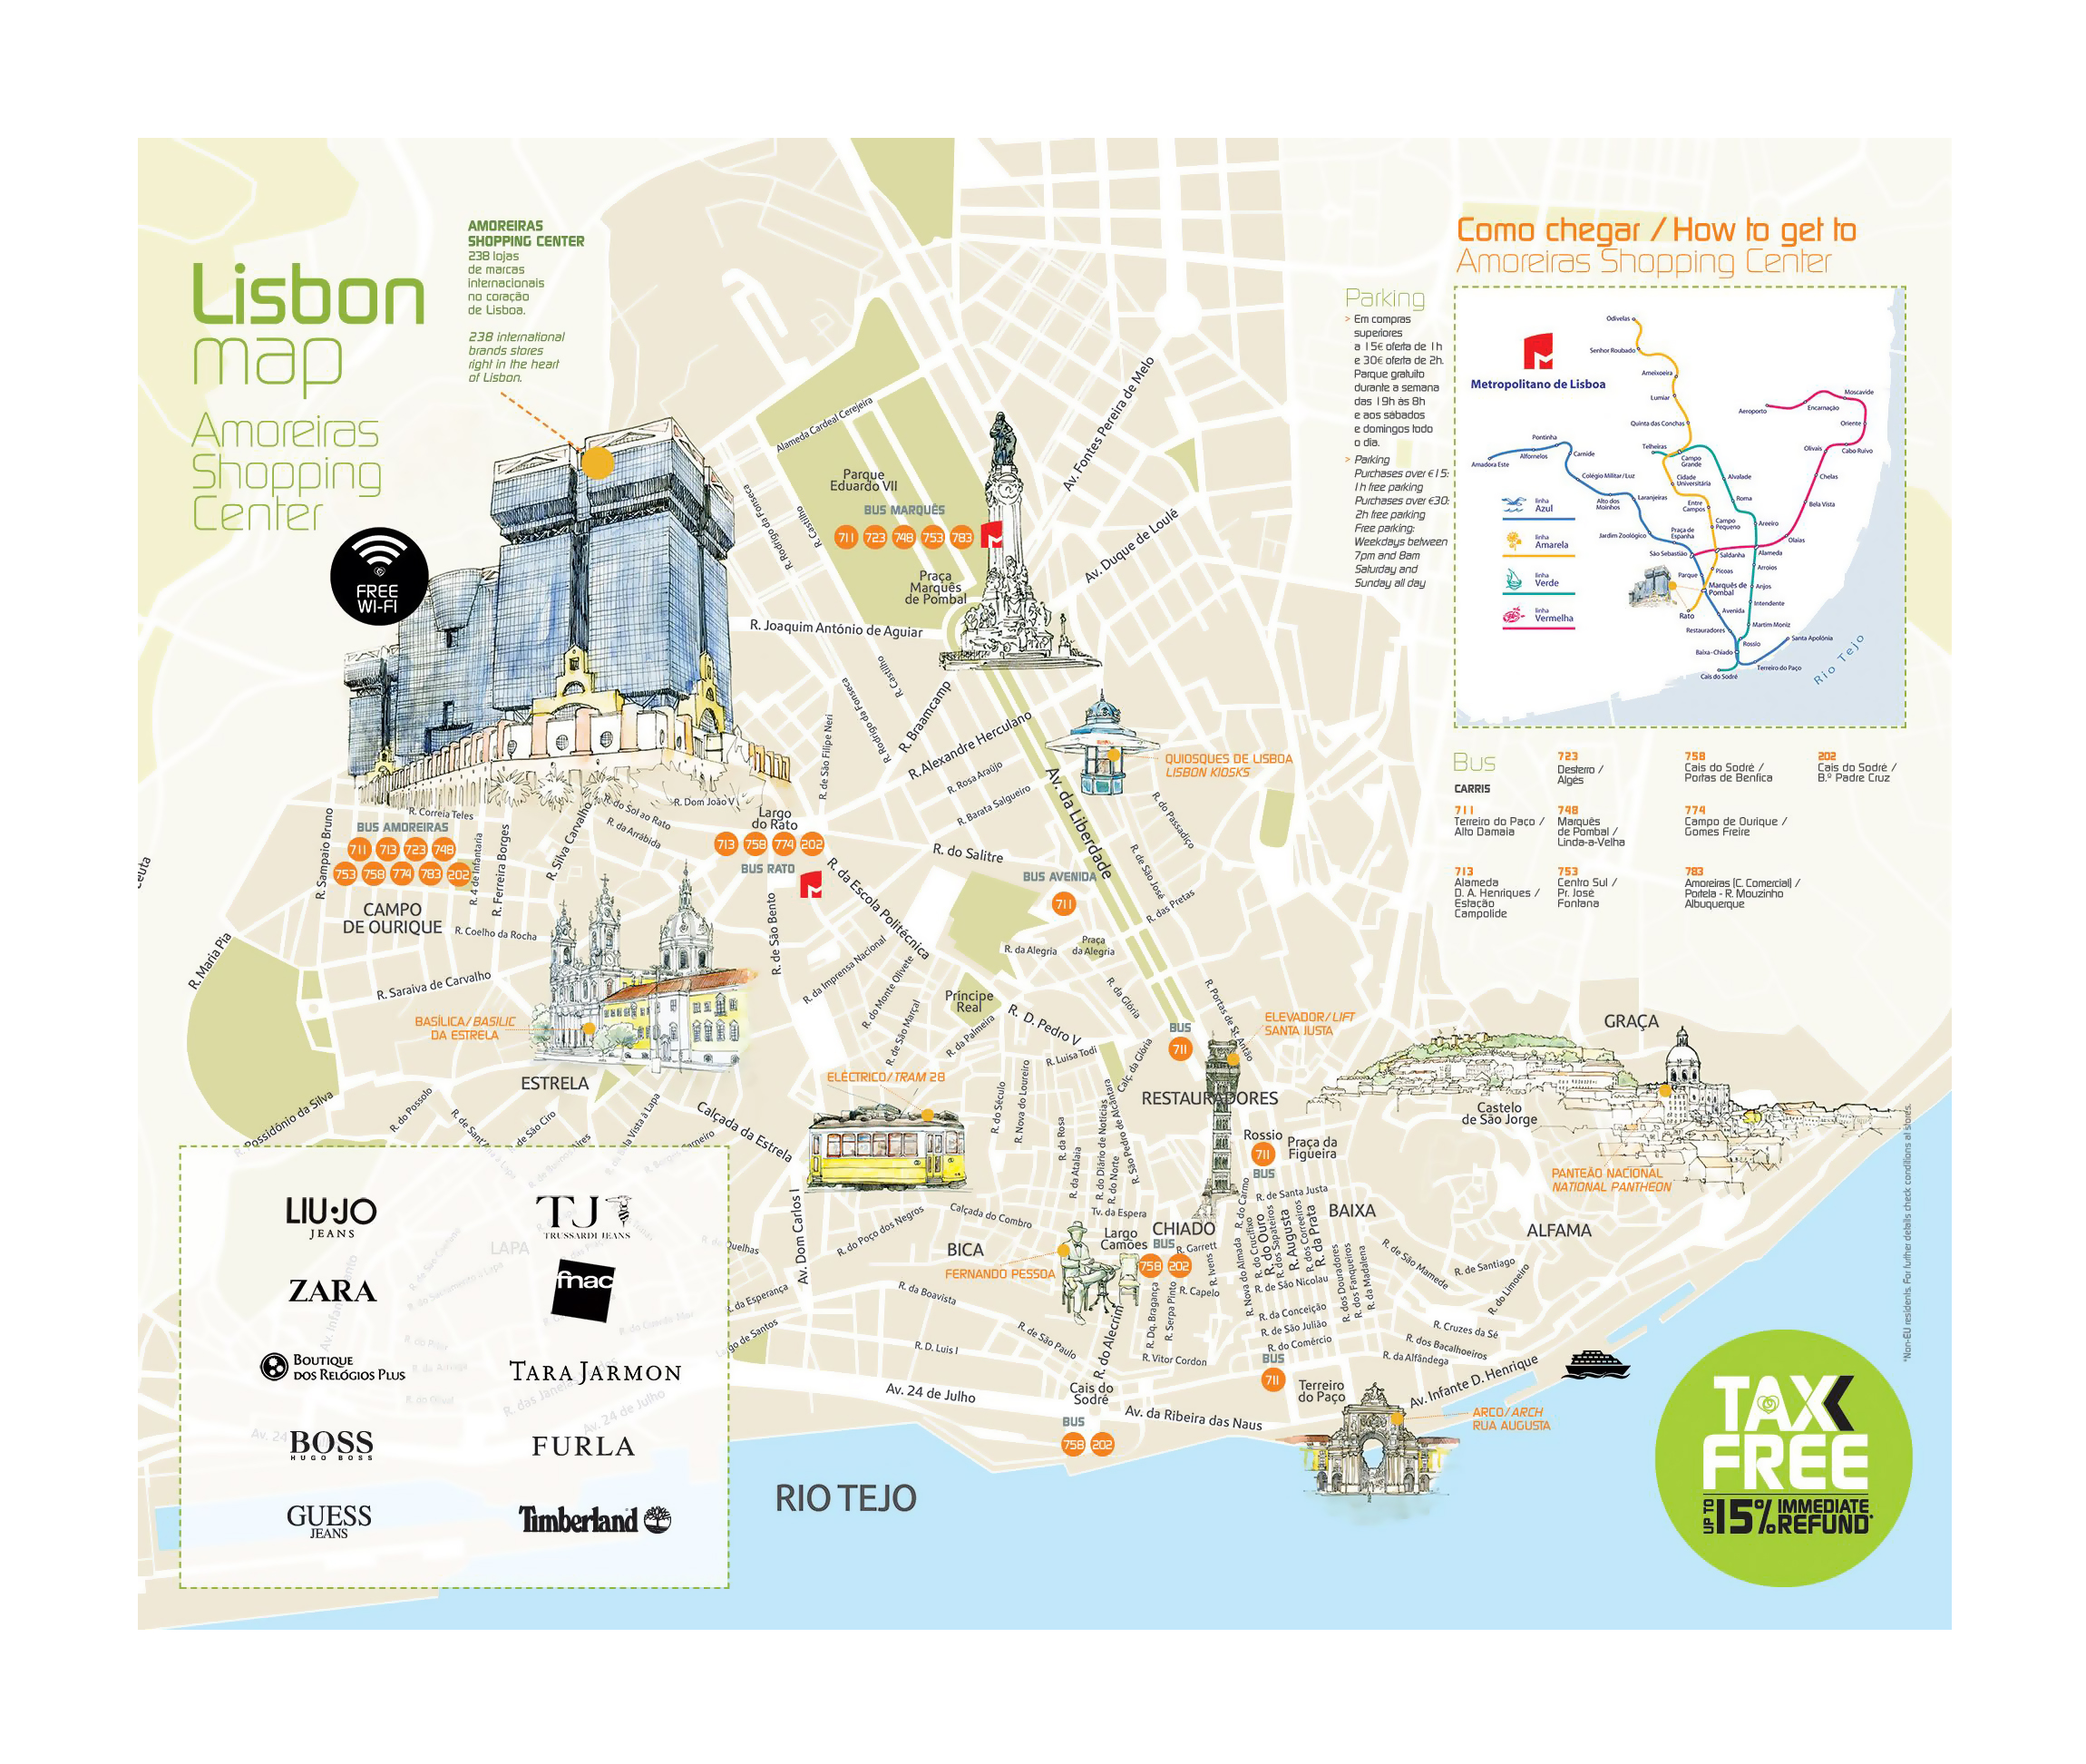 lisbon tourist office locations